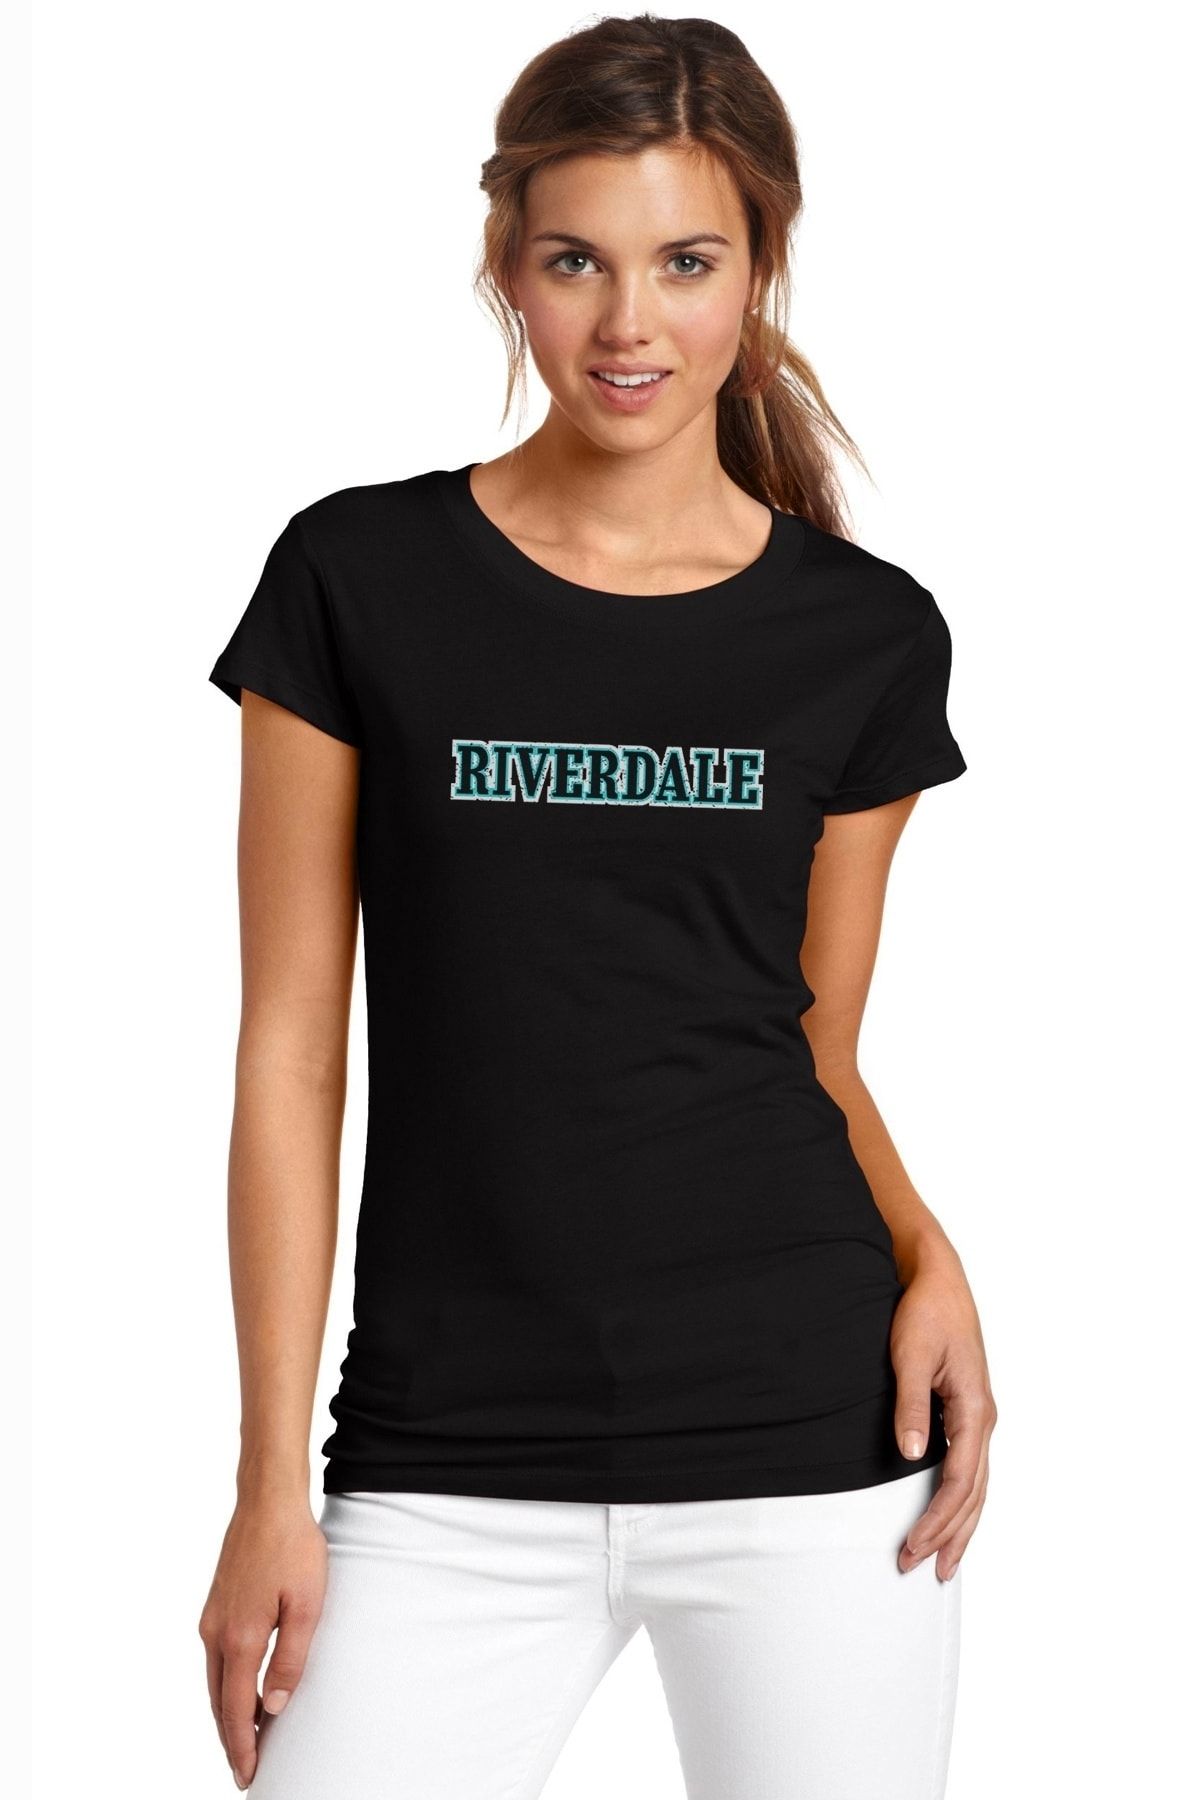 QIVI Riverdale Logo Baskılı Siyah Kadın Örme Tshirt T-shirt Tişört T Shirt